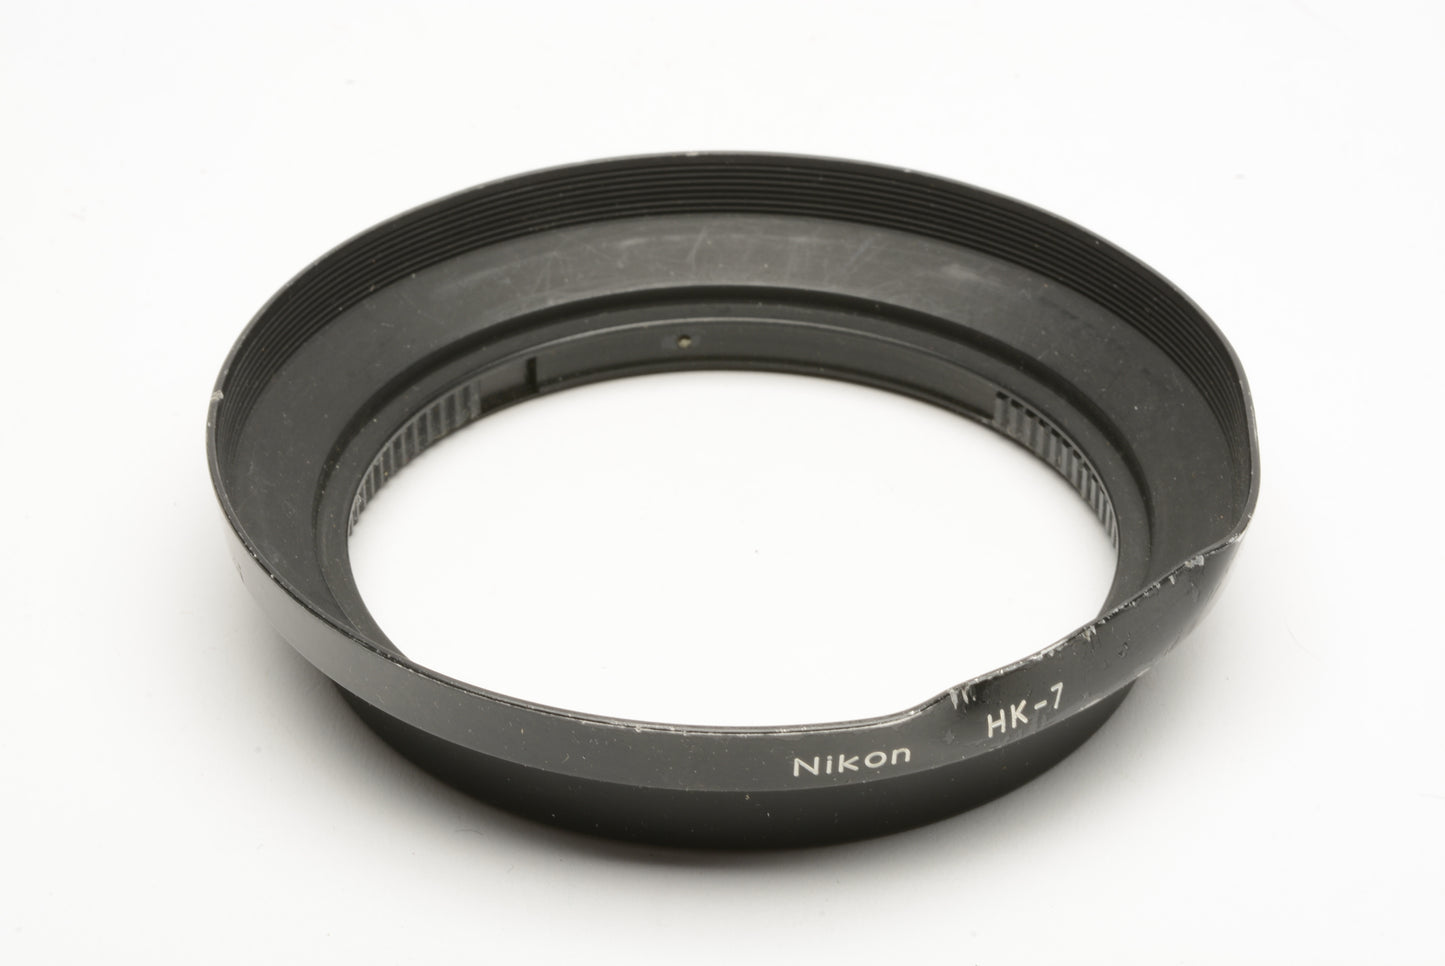 Nikon HK-7 metal slip-on lens hood *Read